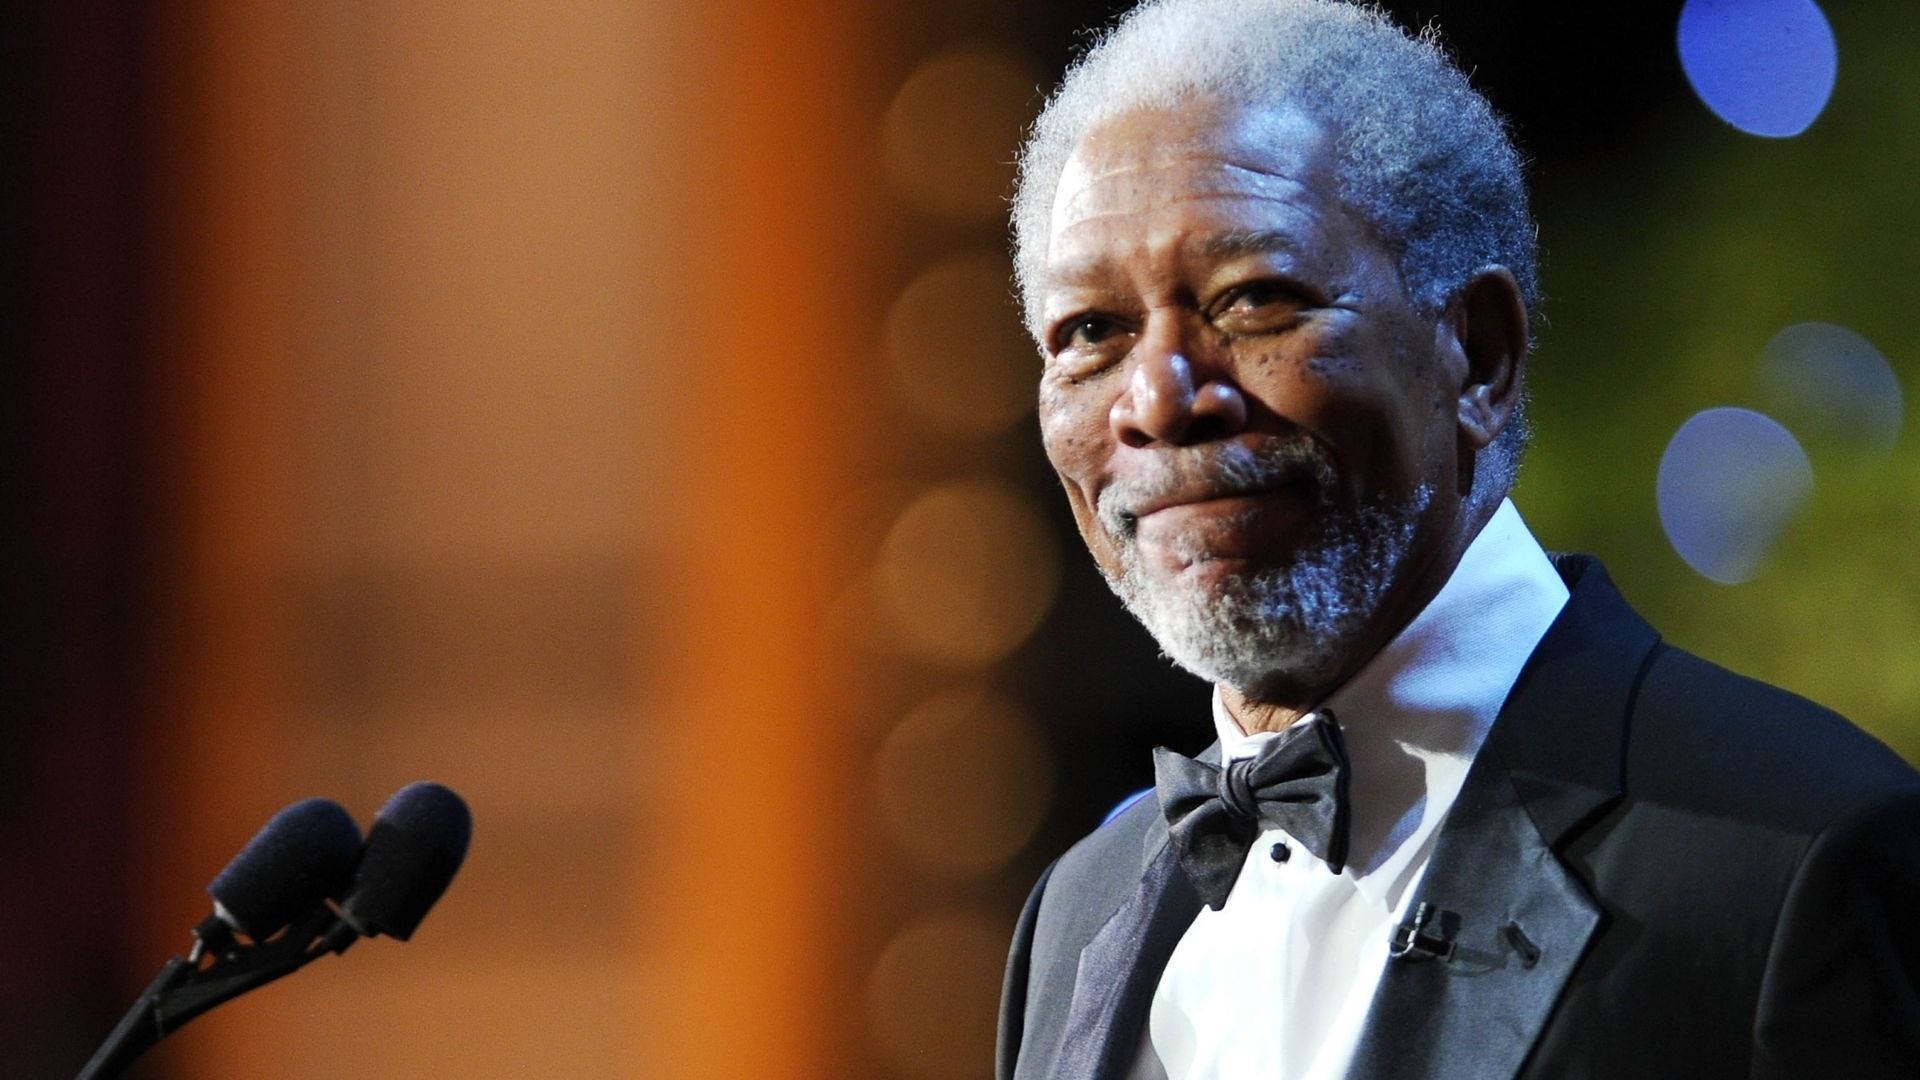 Award-winning Morgan Freeman